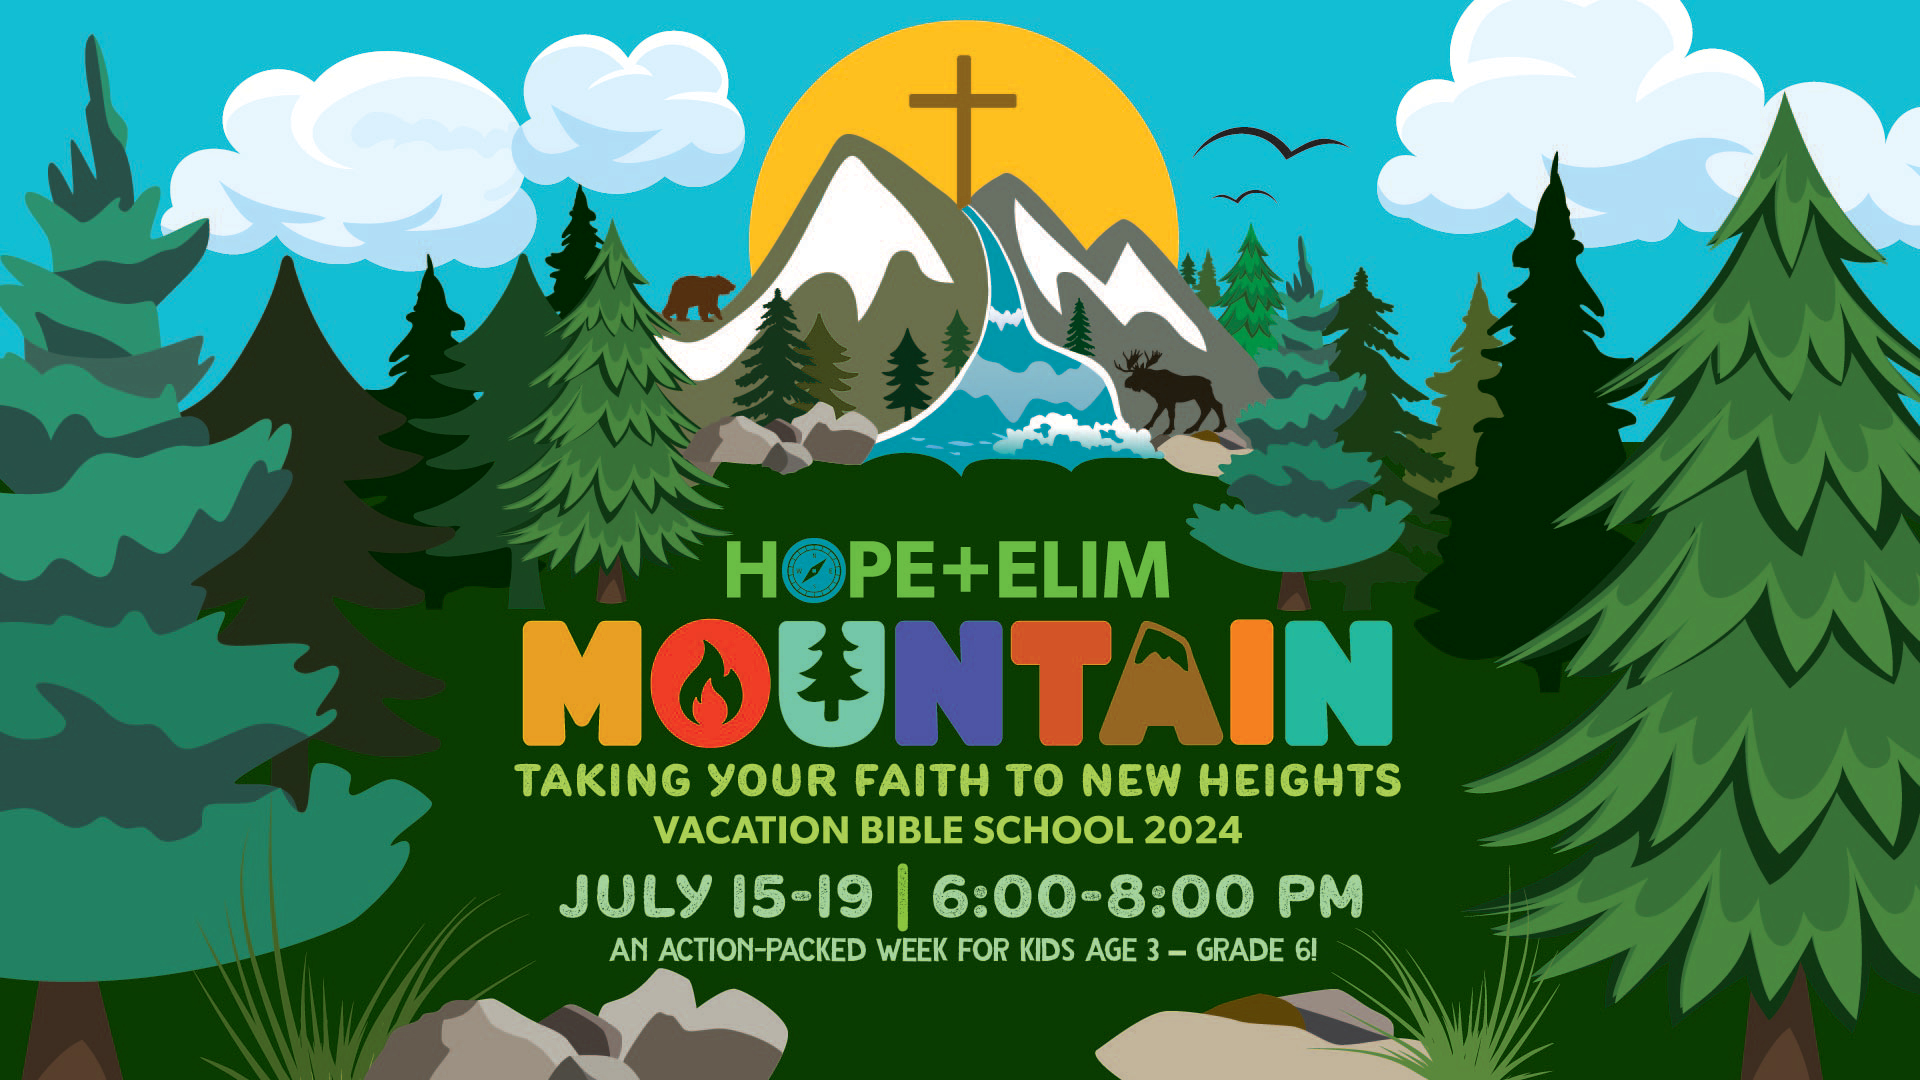 VBS 2024 Hope+Elim Mountain